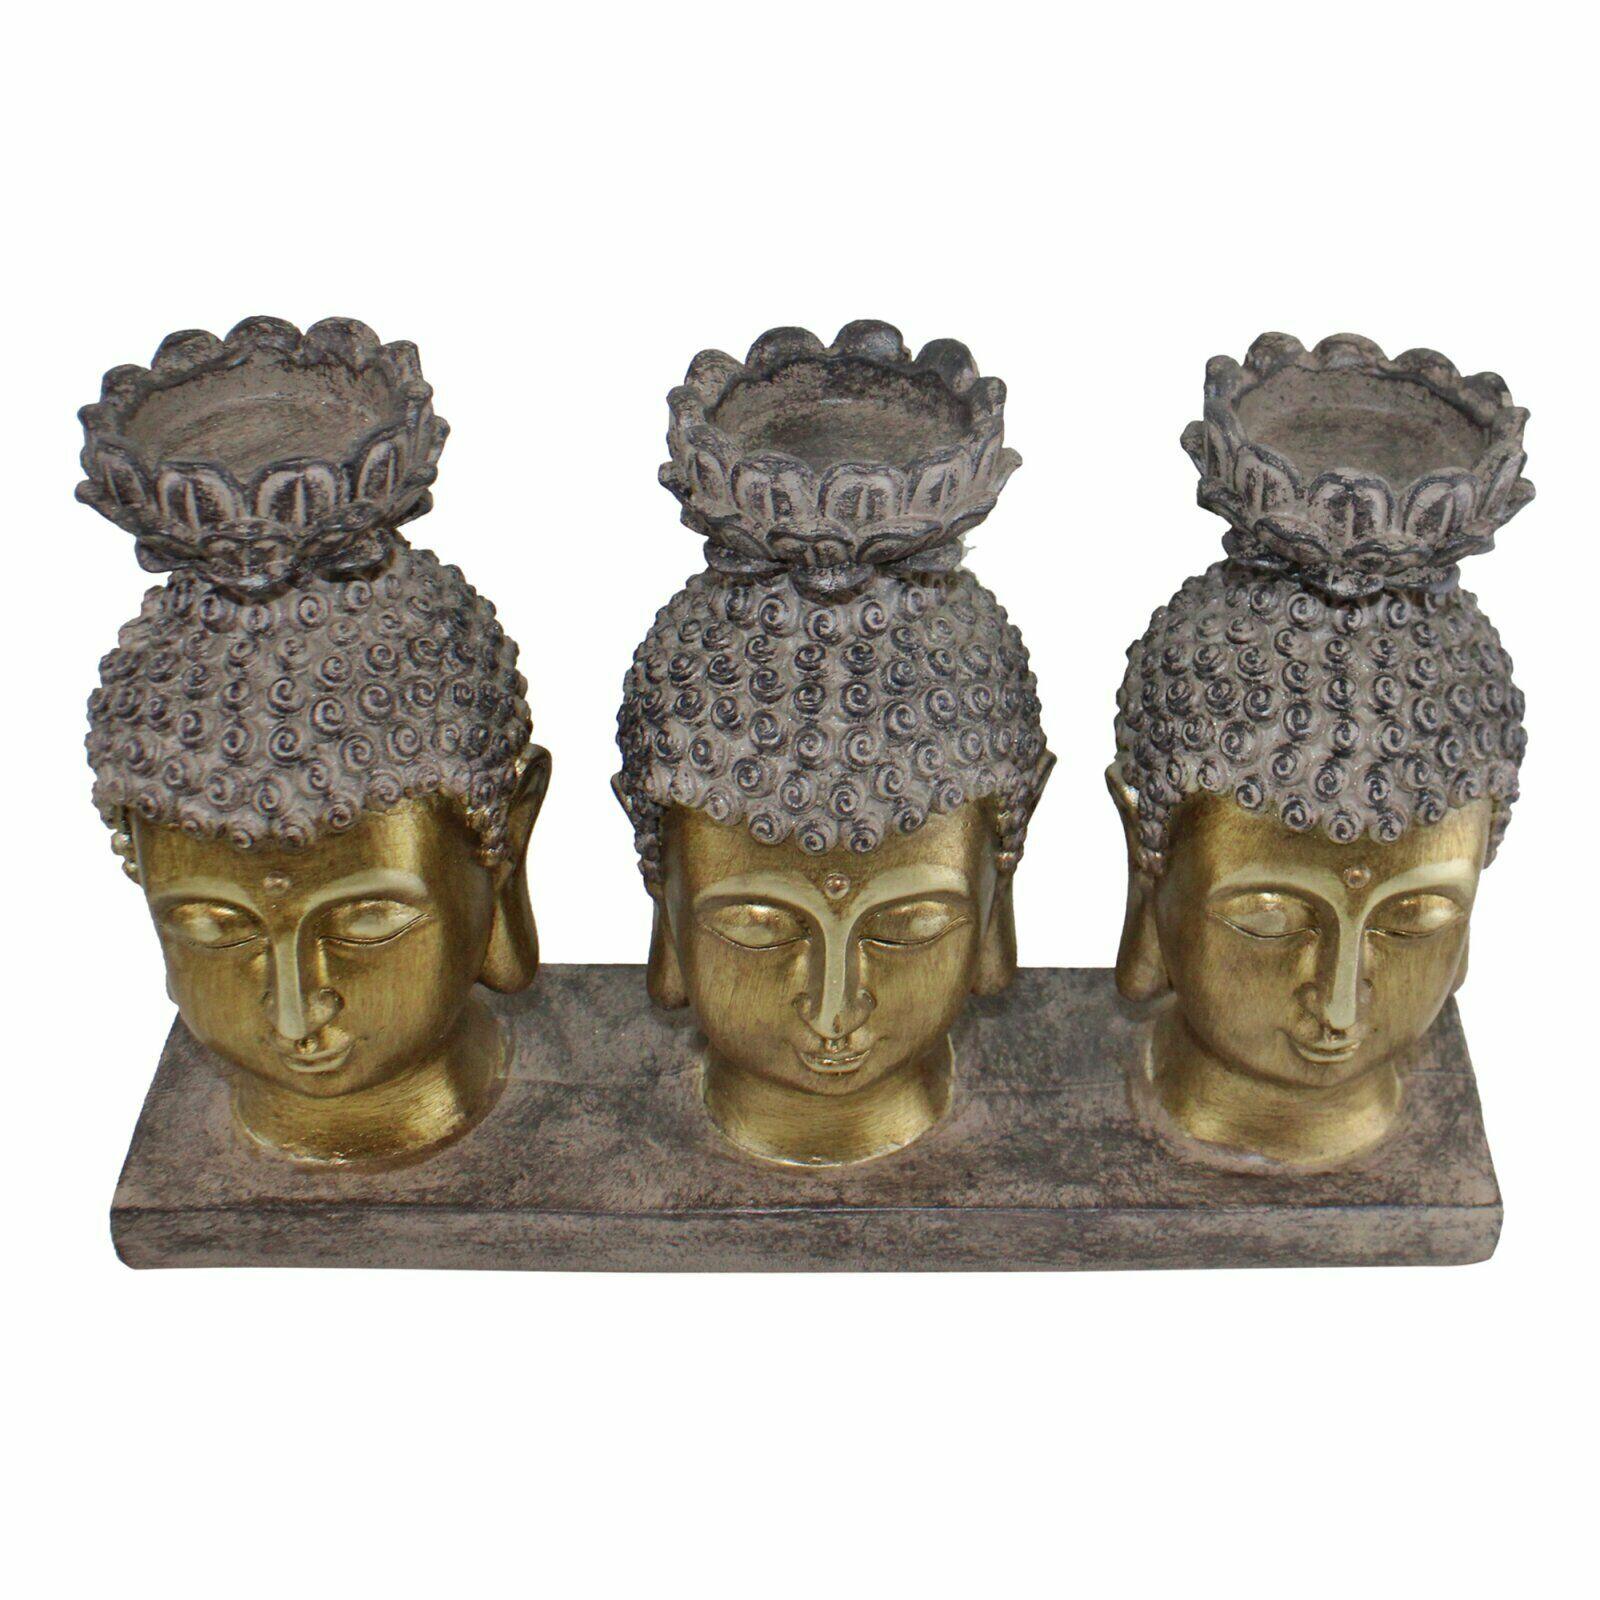 Triple Candle Tea Light Holder on Base, Thai Buddha Design - Home Inspired Gifts